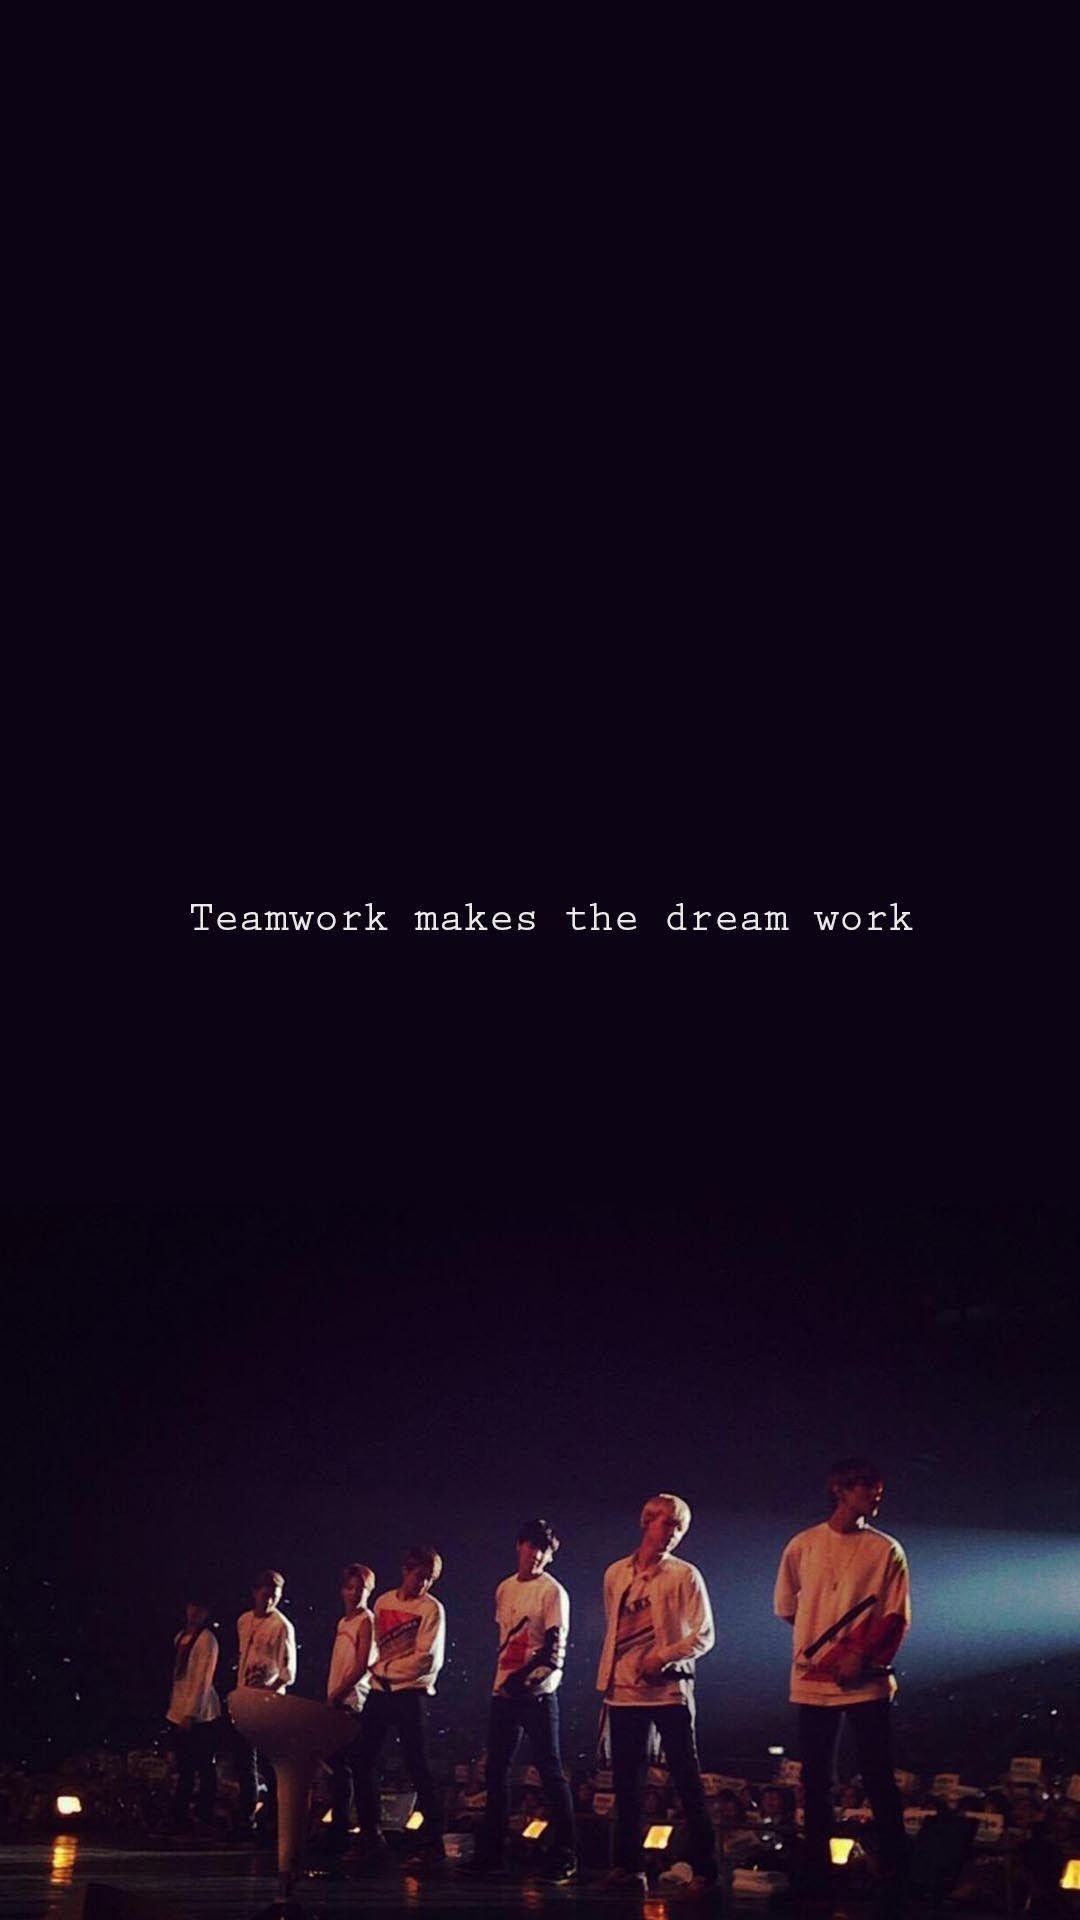 wallpaper Teamwork make dream work BTS by SollusMagna on DeviantArt